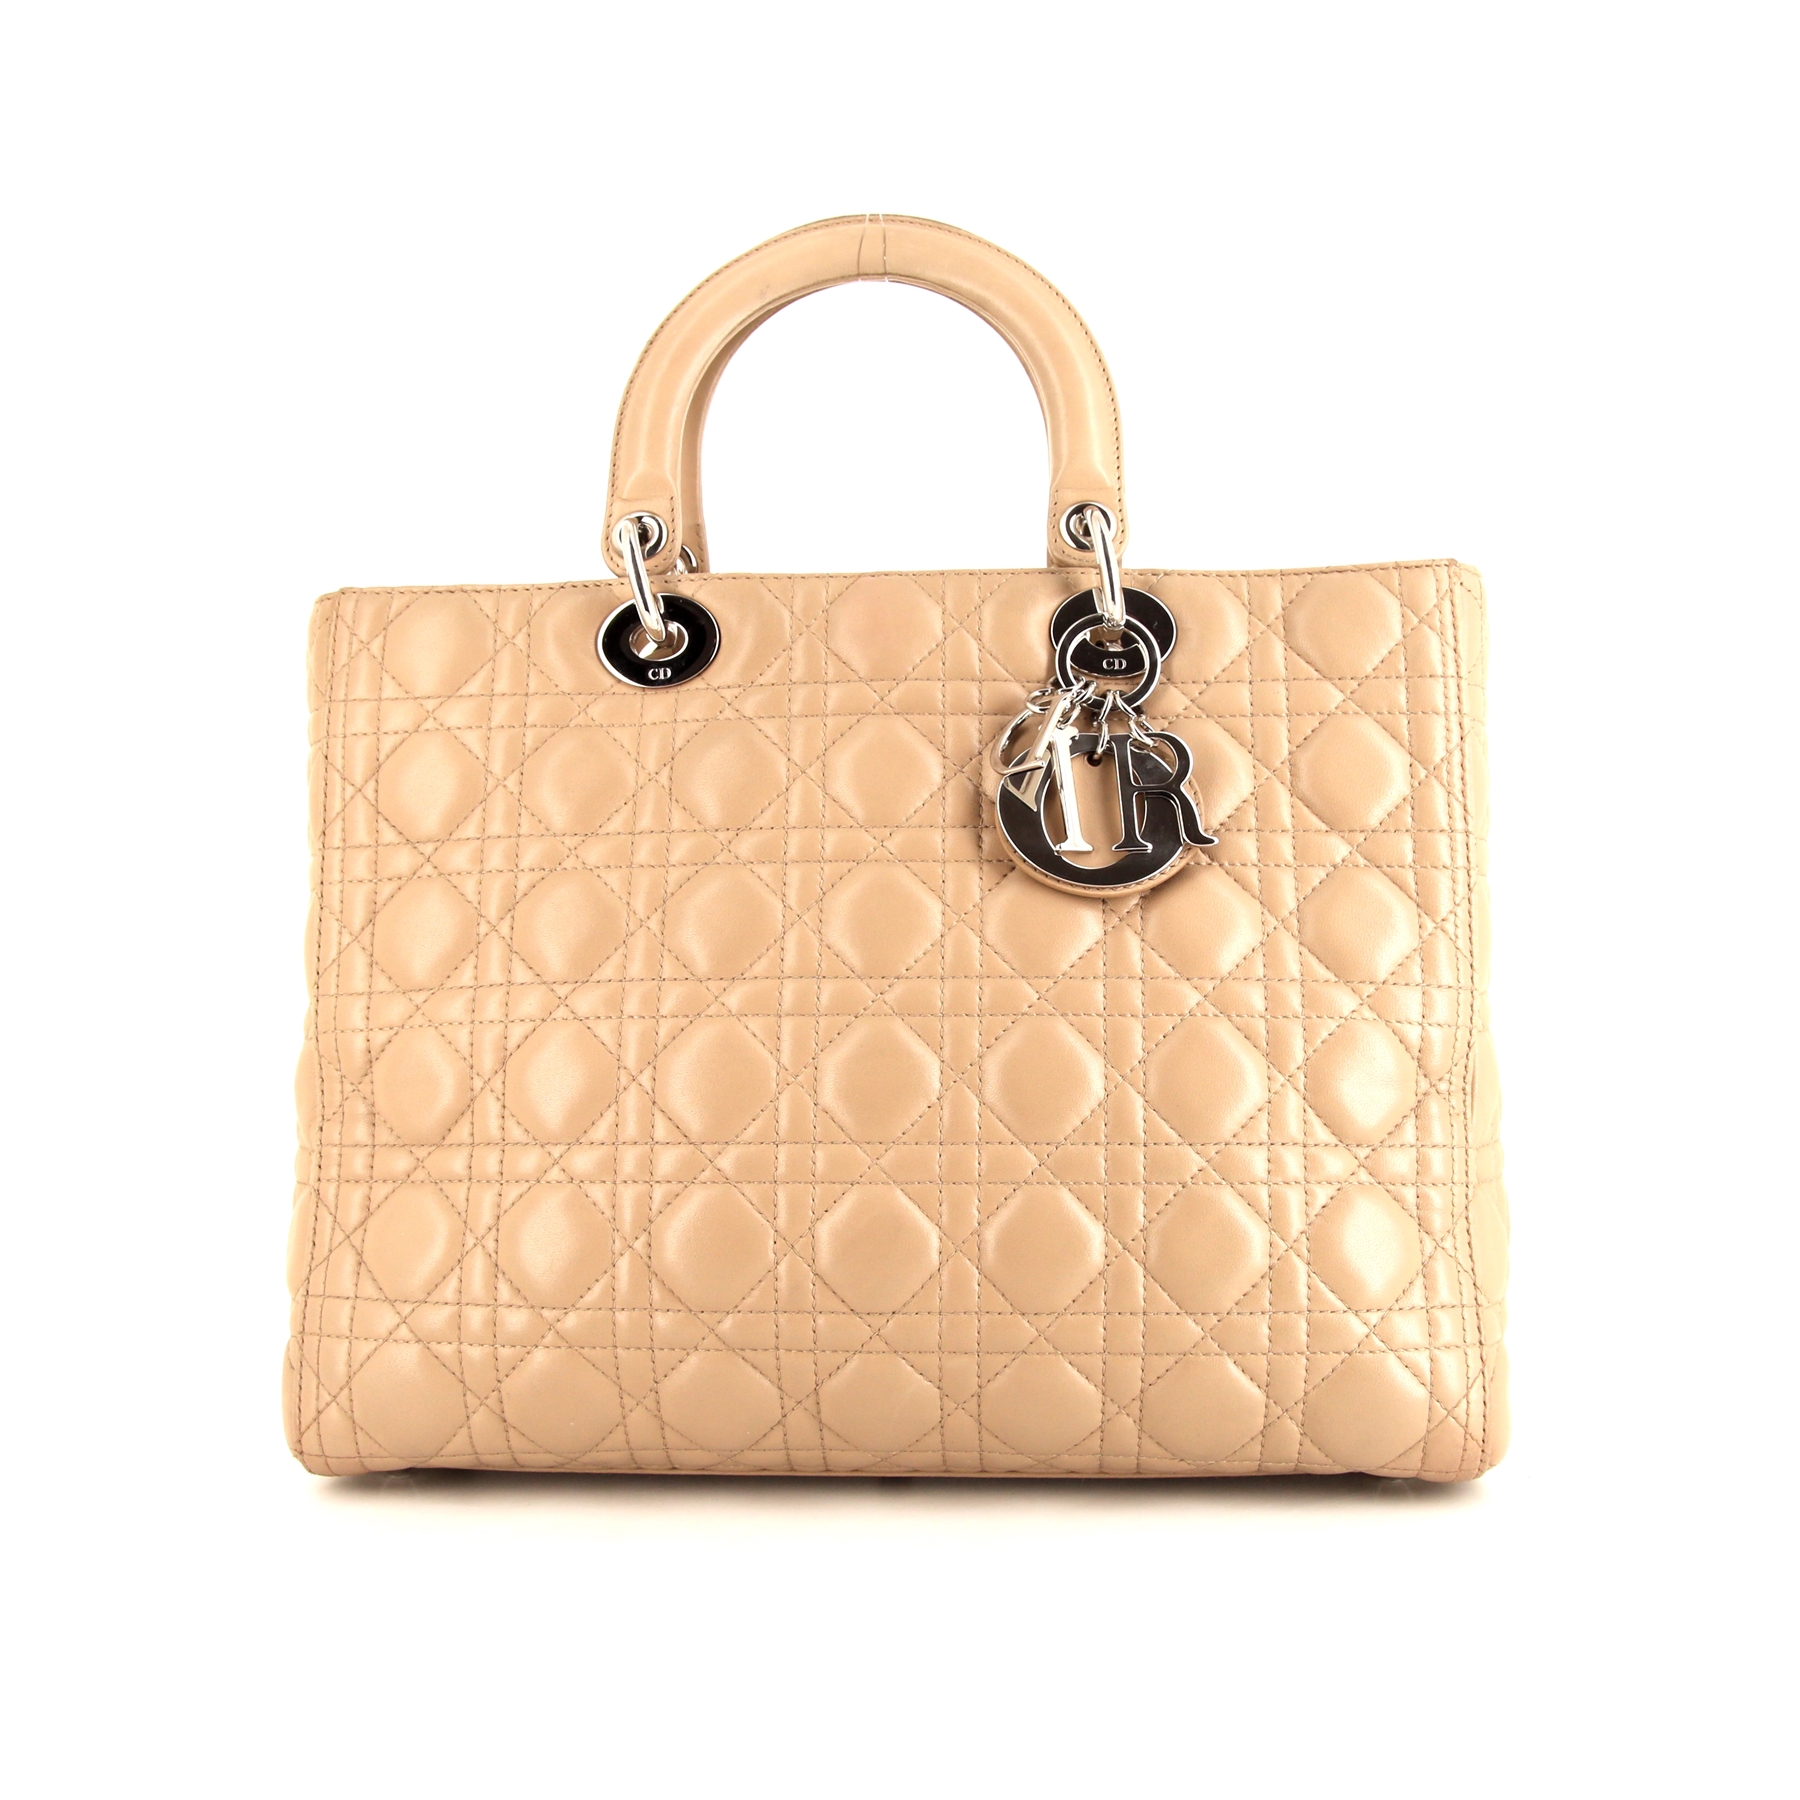 Lady Dior Large Model Handbag In Beige Leather Cannage